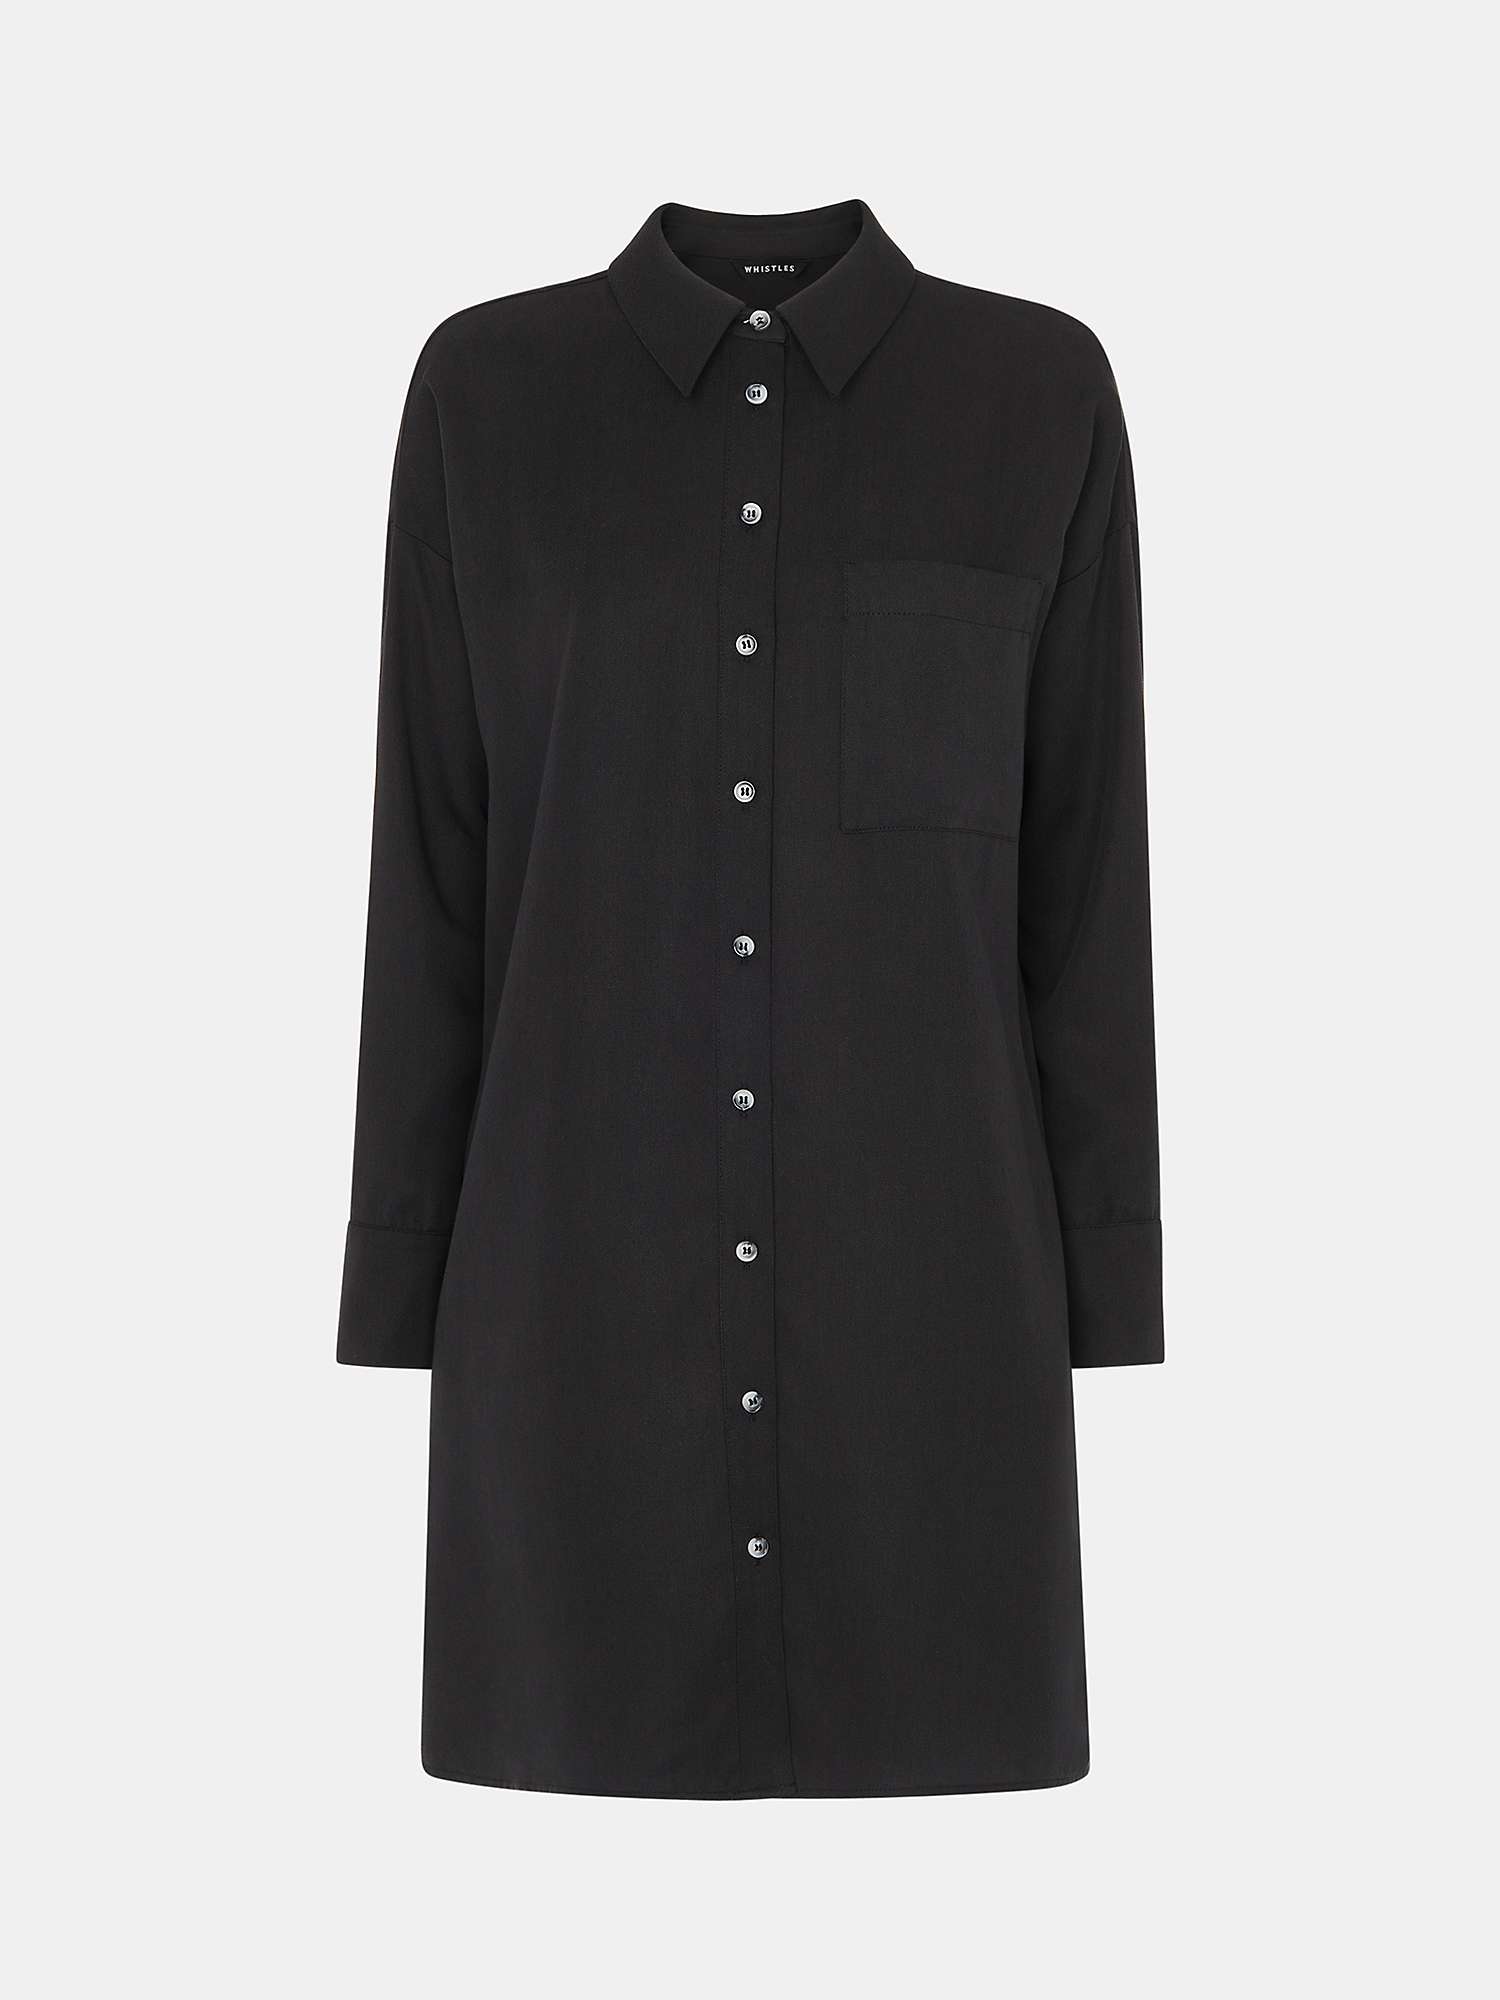 Whistles Helena Relaxed Shirt Dress, Black at John Lewis & Partners